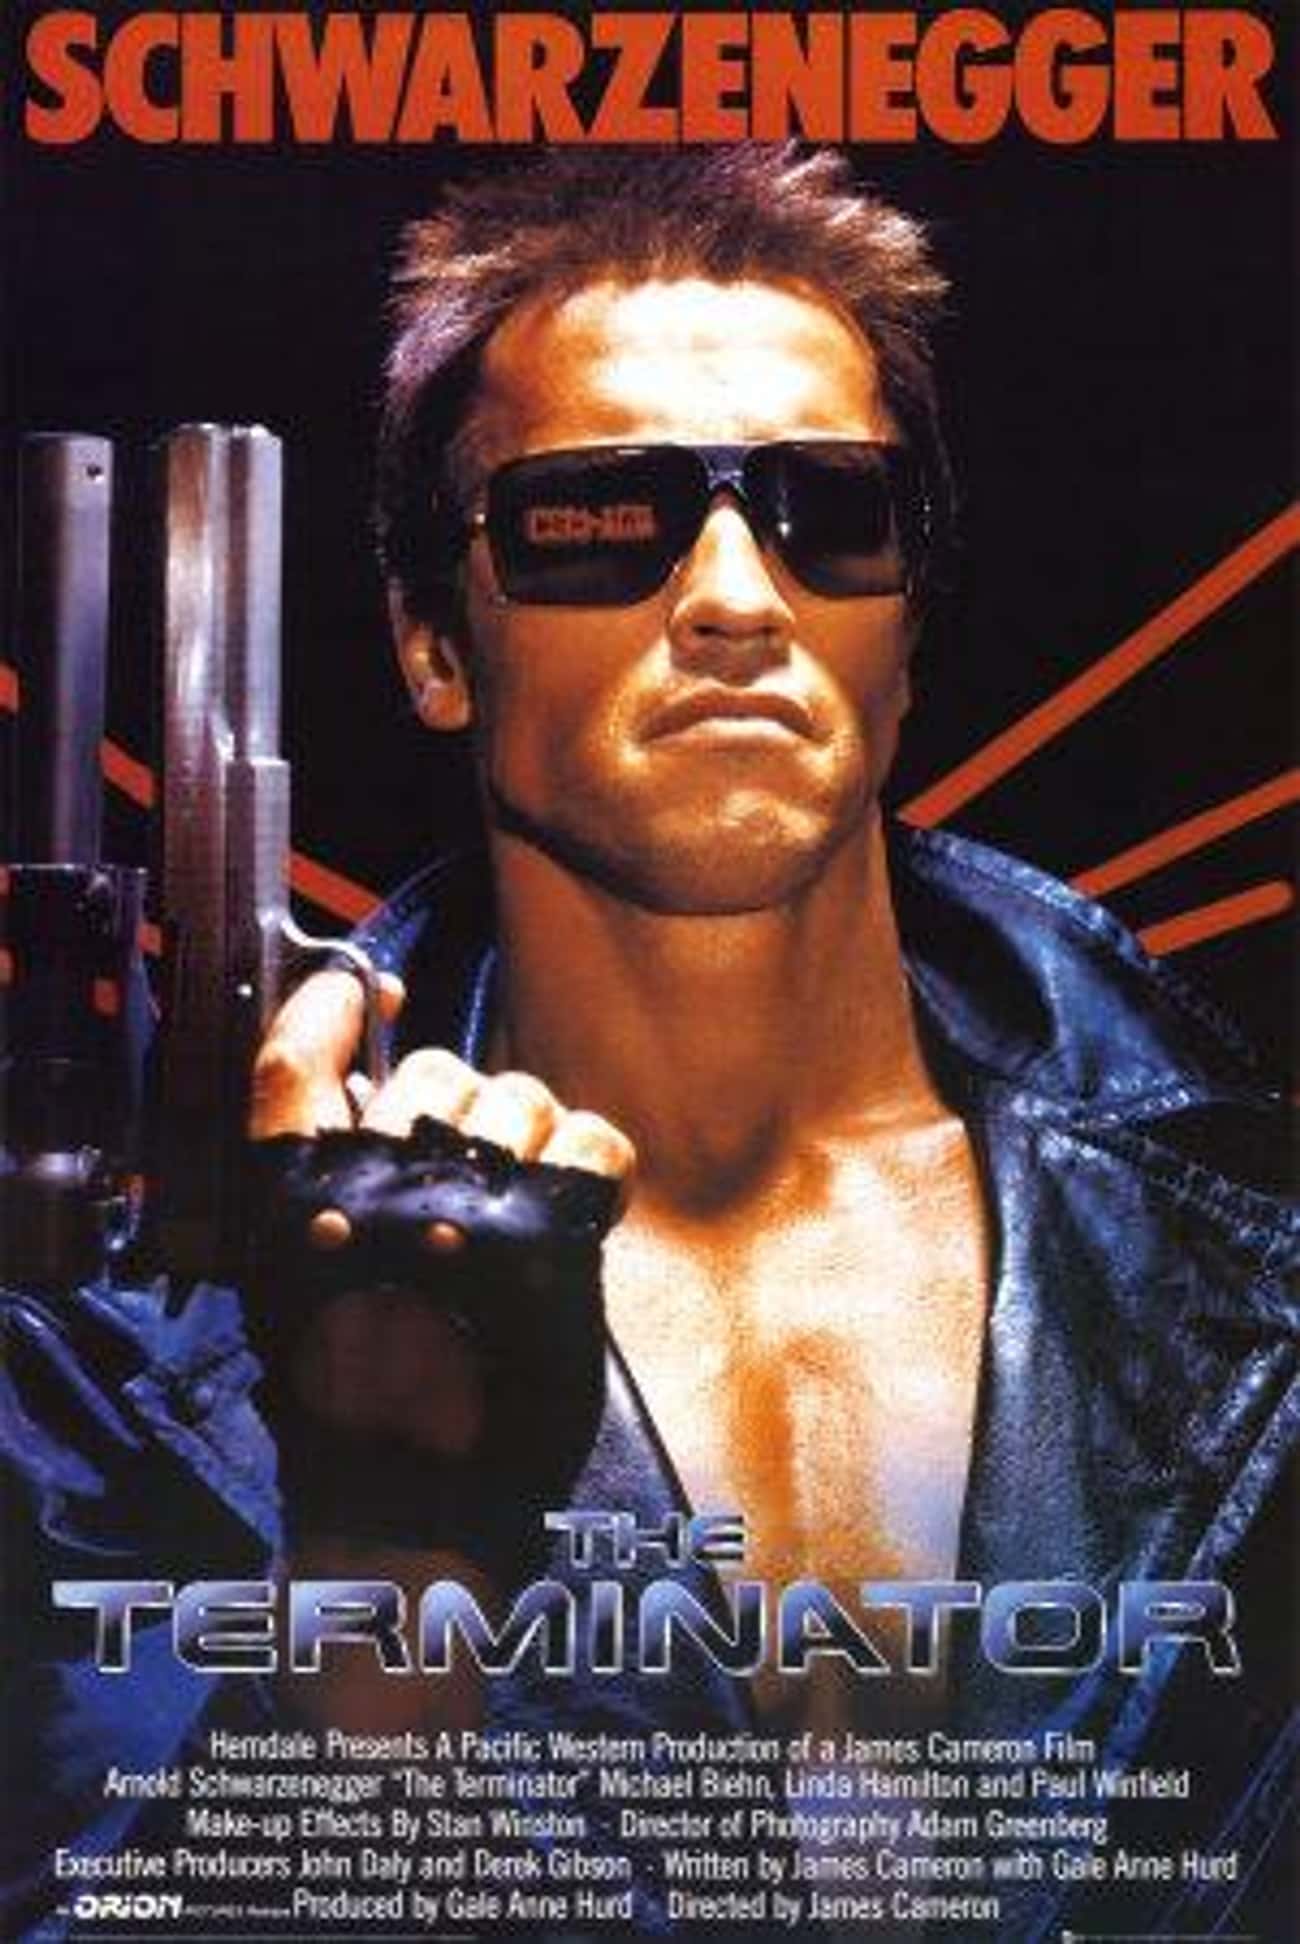 The Terminator Franchise